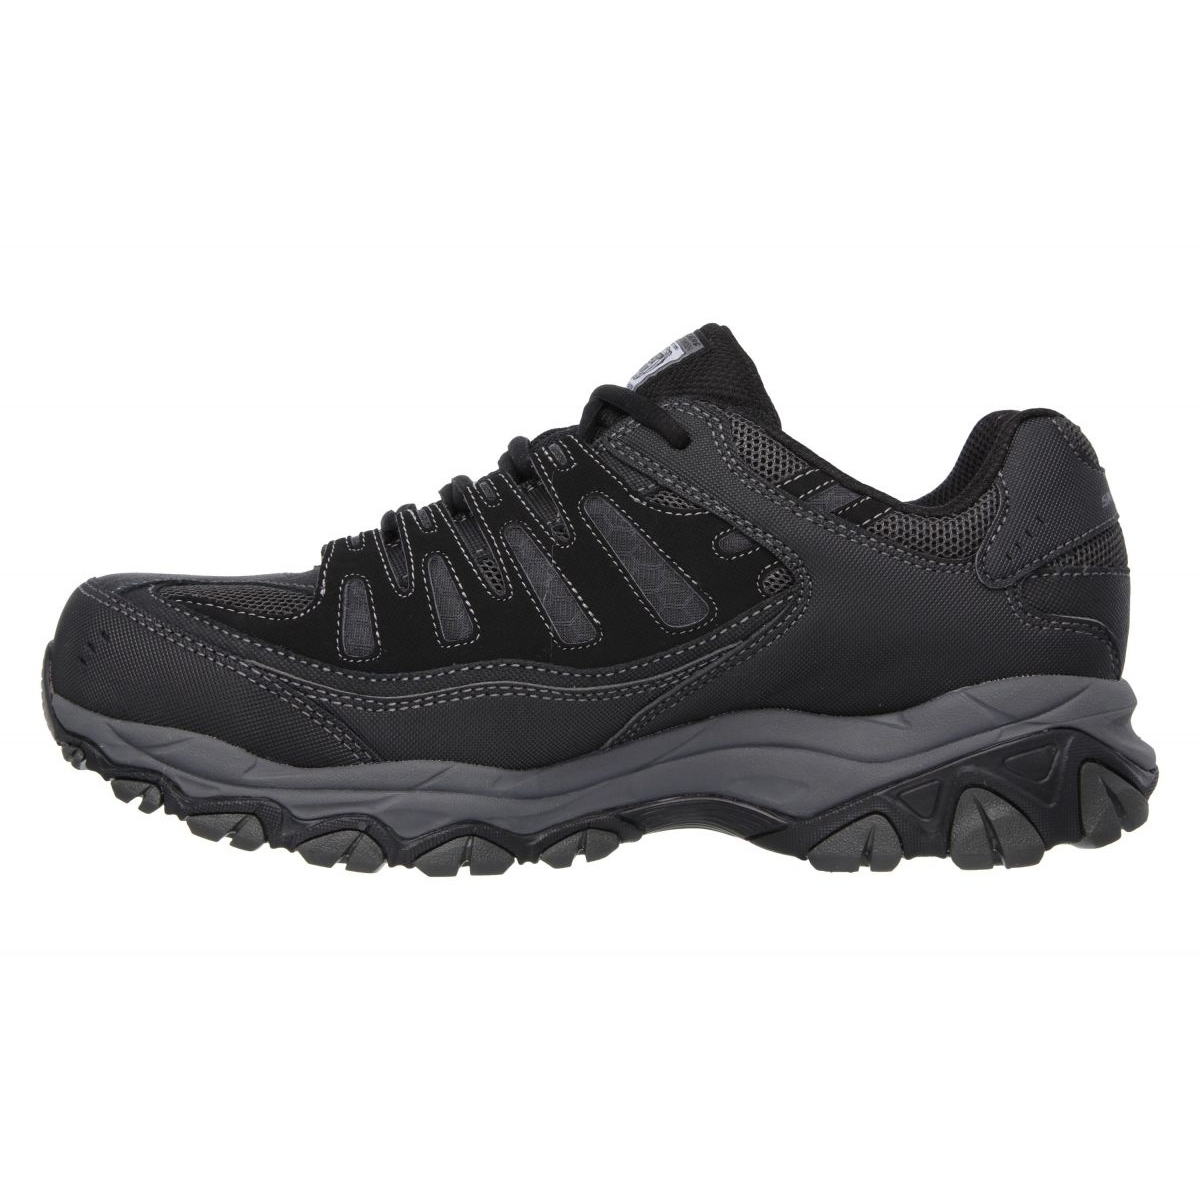 Skechers Men's Cankton-U Industrial Shoe 7 BLACK/CHARCOAL - BLACK/CHARCOAL, 9-W